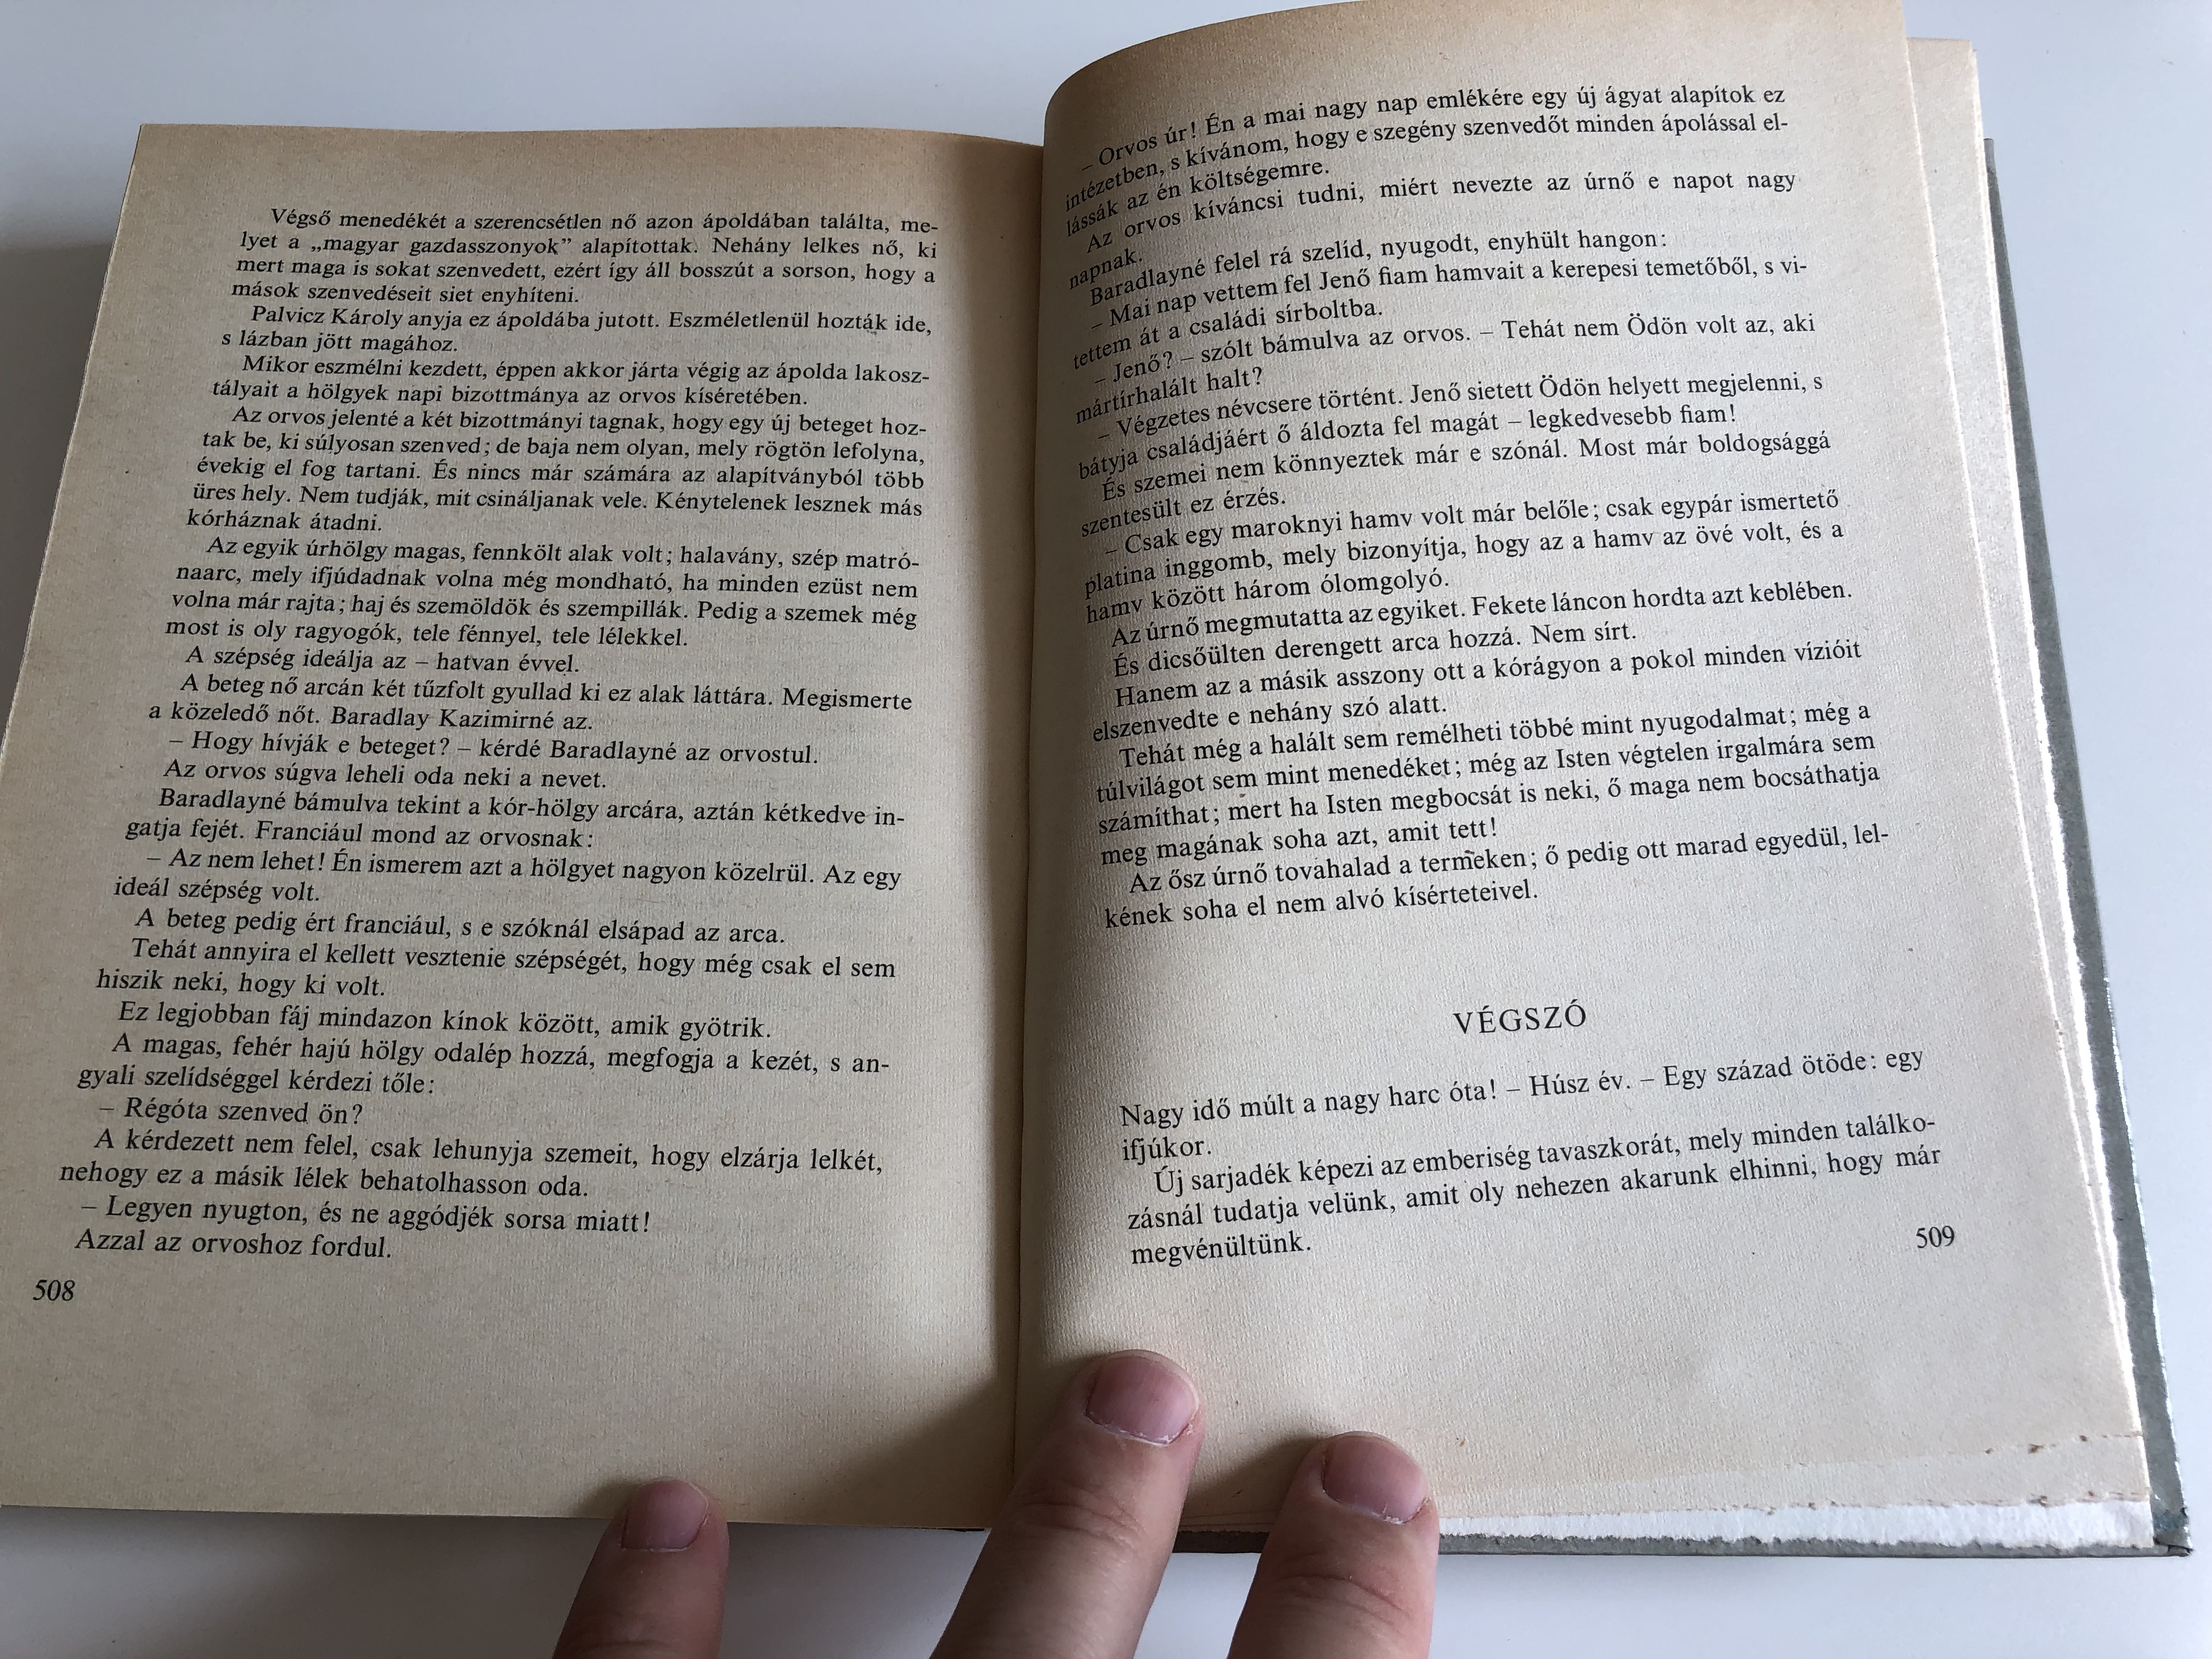 a-k-sz-v-ember-fiai-by-j-kai-m-r-8th-edition-m-ra-k-nyvkiad-1979-hungarian-literary-classic-10-.jpg